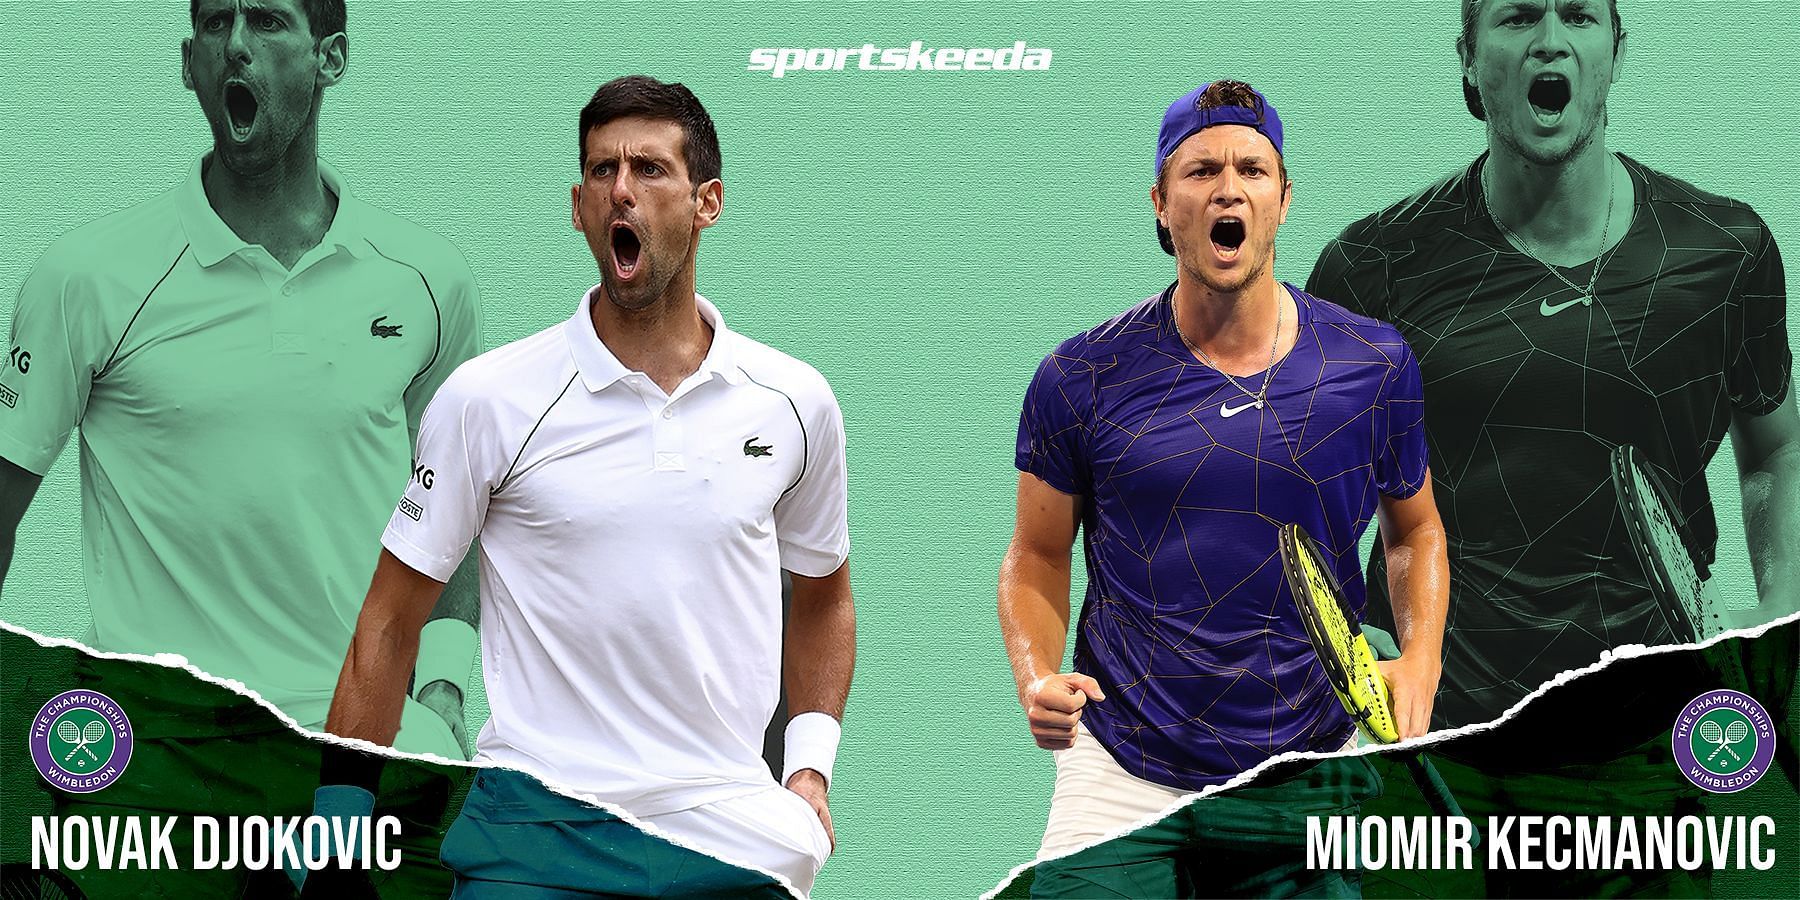 Wimbledon 2022 Novak Djokovic vs Miomir Kecmanovic preview, head-to-head, prediction, odds and pick